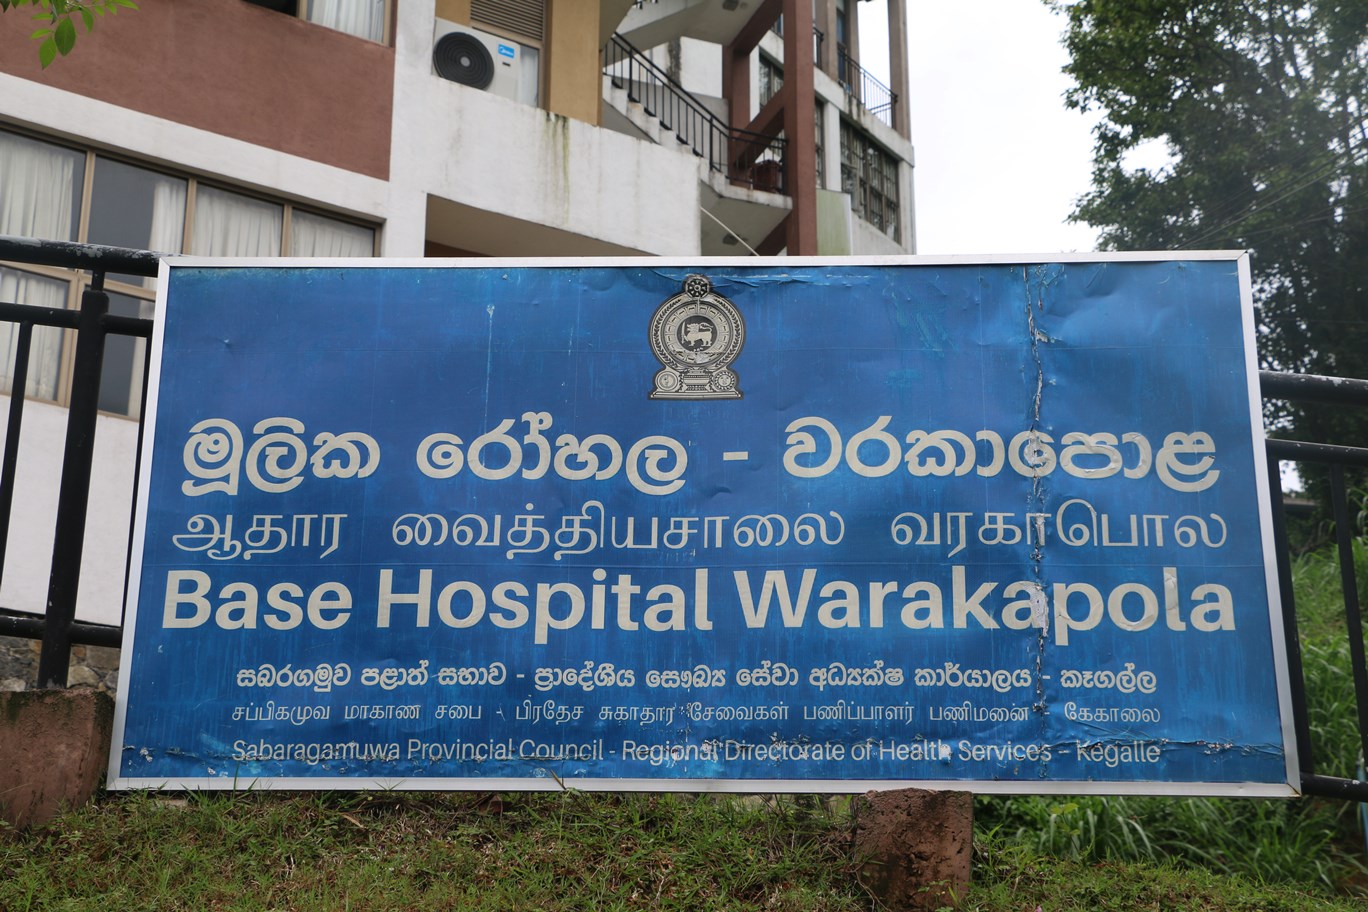 Request Letter from Sri Lankan Hospital